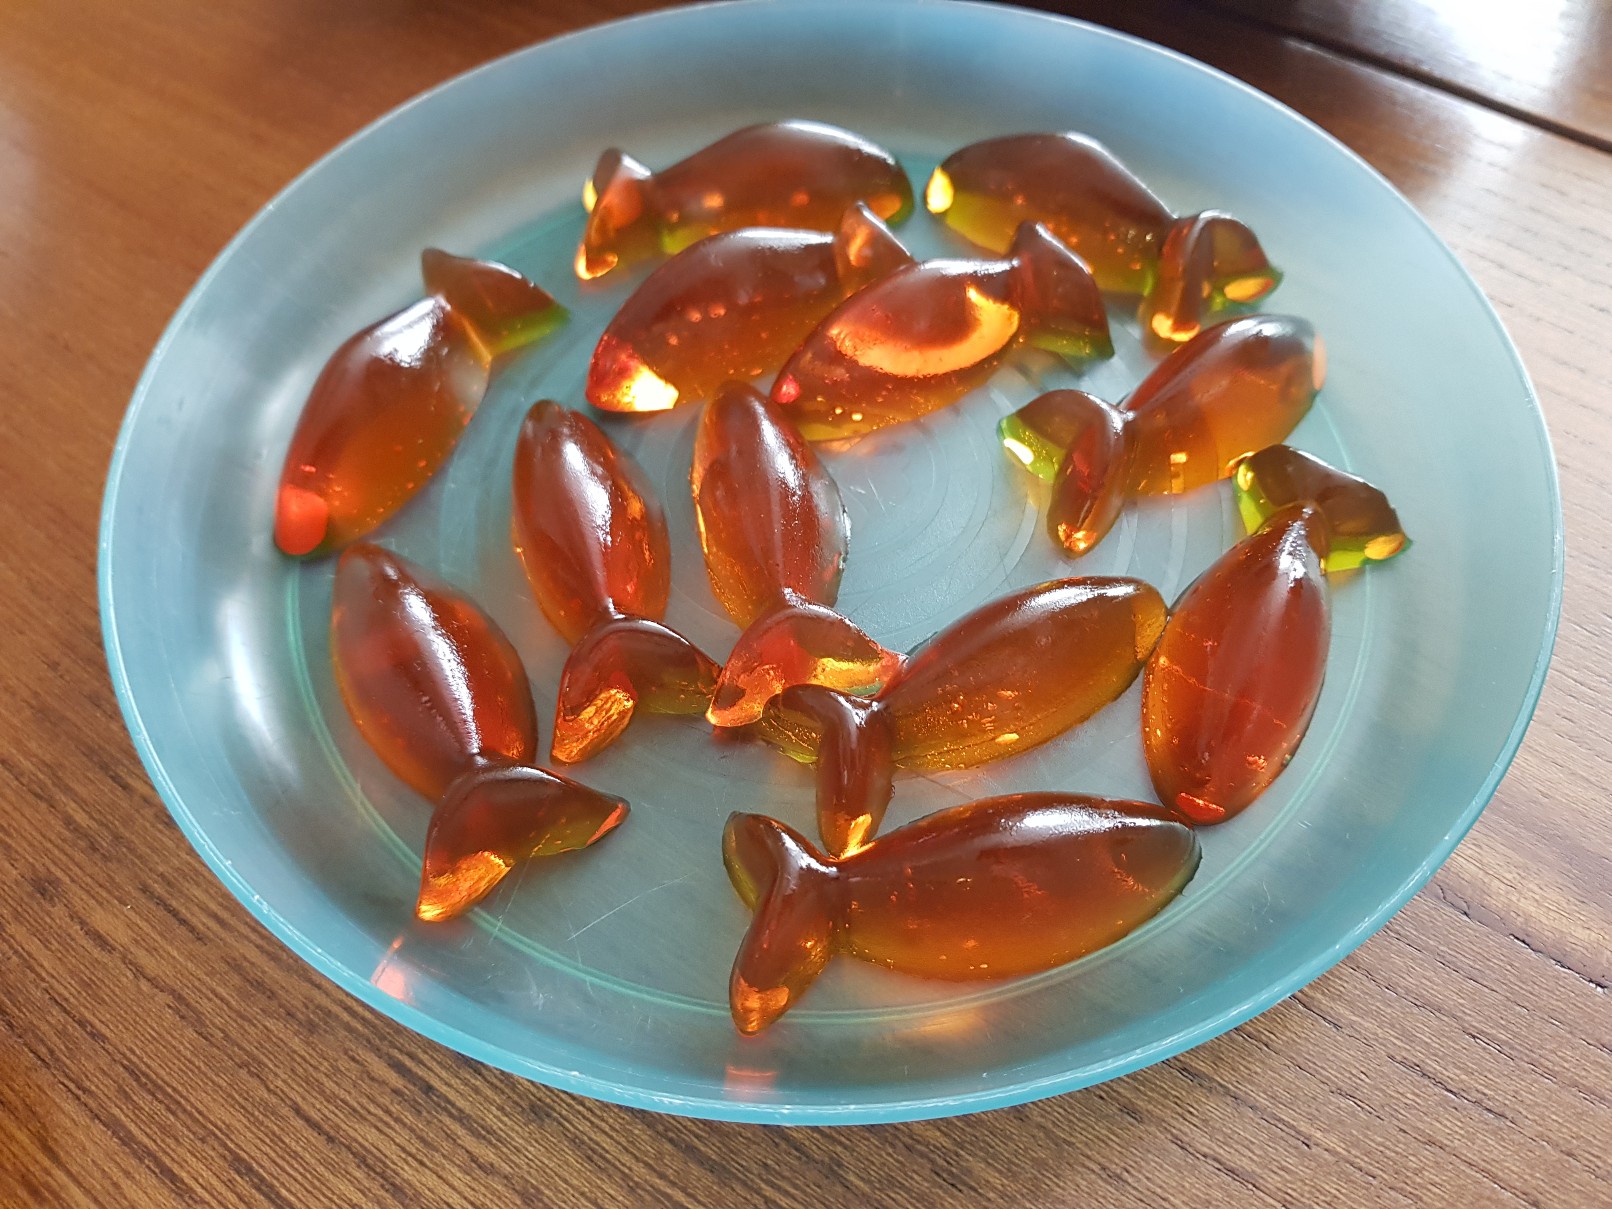 nemo birthday party food ideas orange jelly fish